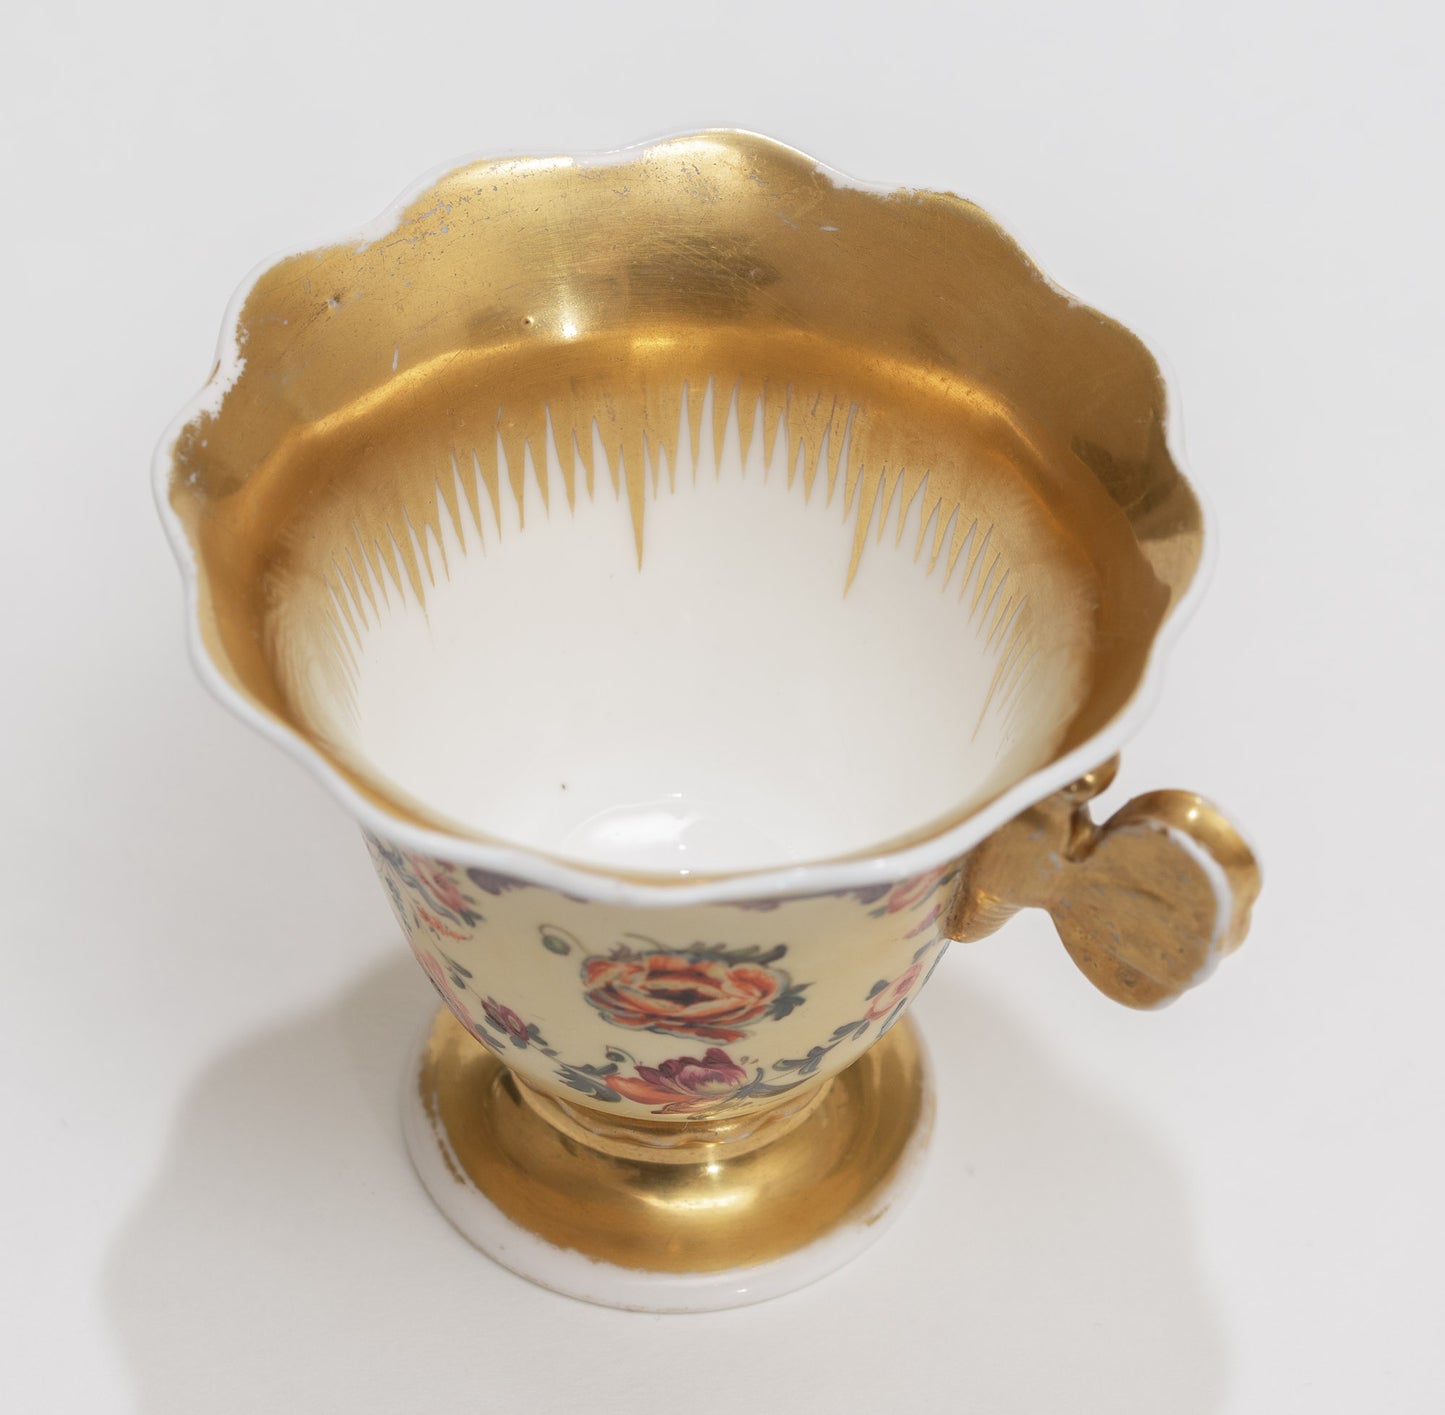 Rare Spode Butterfly Handle Custard Cup, Georgian Regency Antique China c1815 (3115)